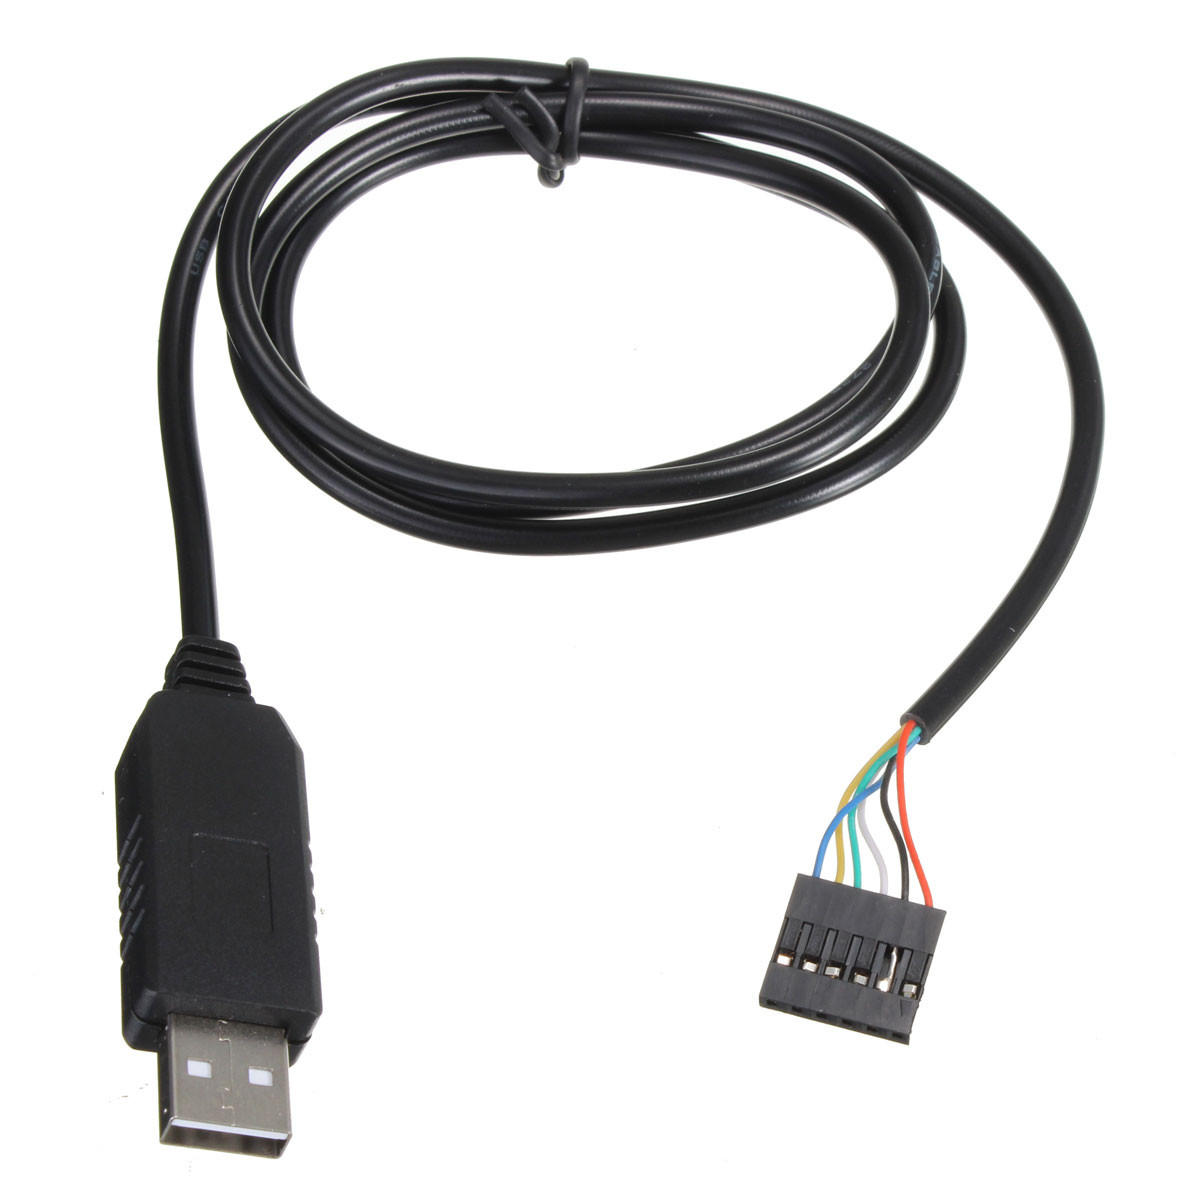 5 stks 6Pin FTDI FT232RL USB naar seri?le adaptermodule USB NAAR TTL RS232 kabel